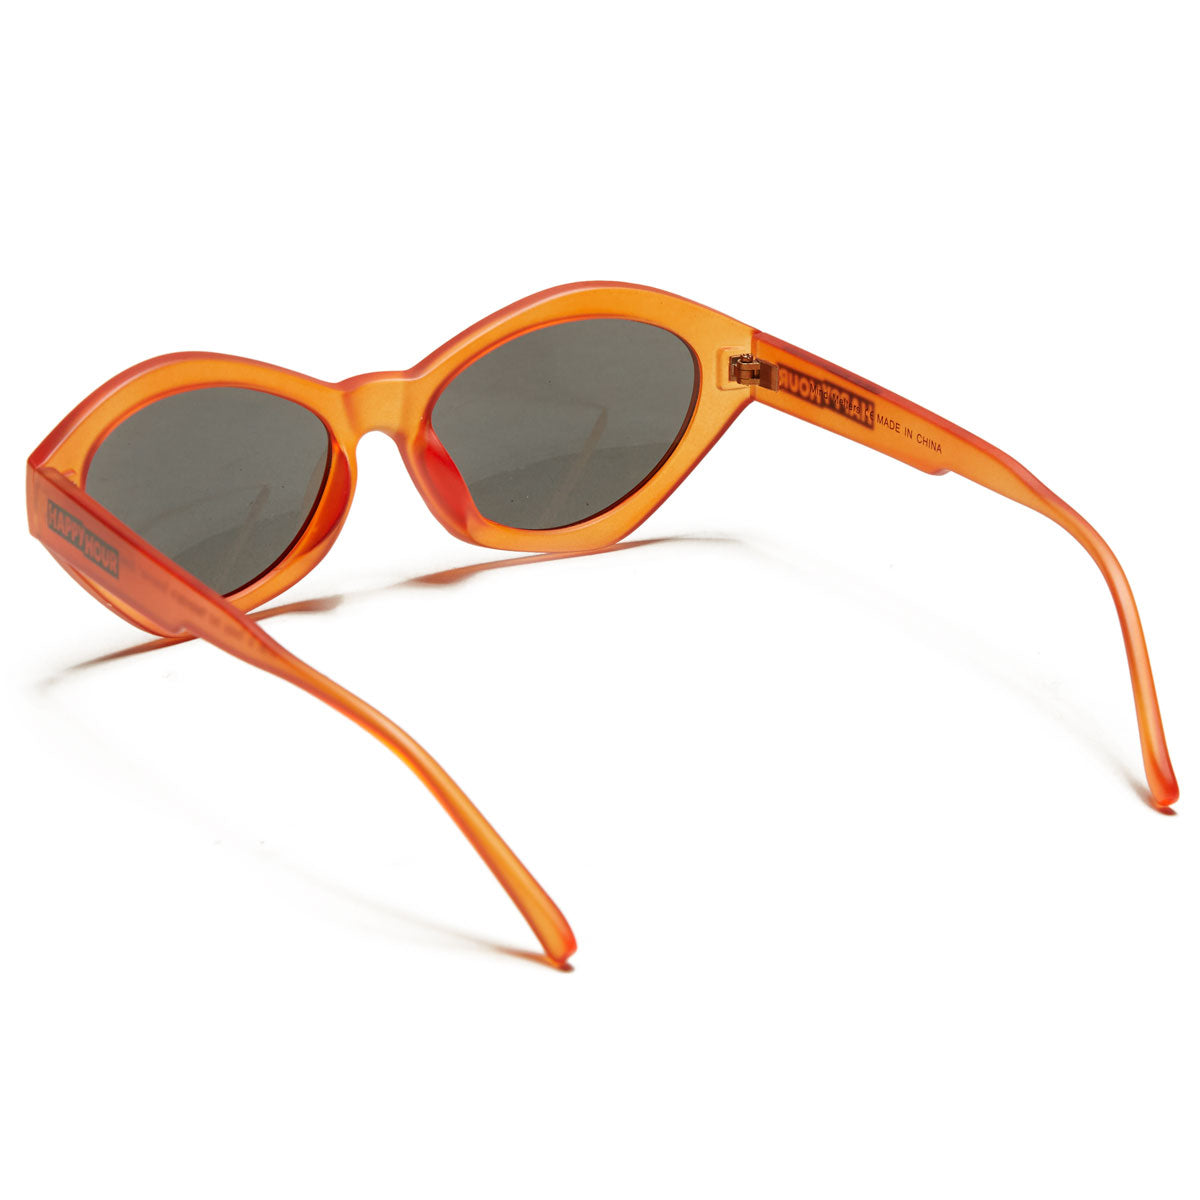 Happy Hour Mind Melters Sunglasses - Crab Shacks/Glick image 2